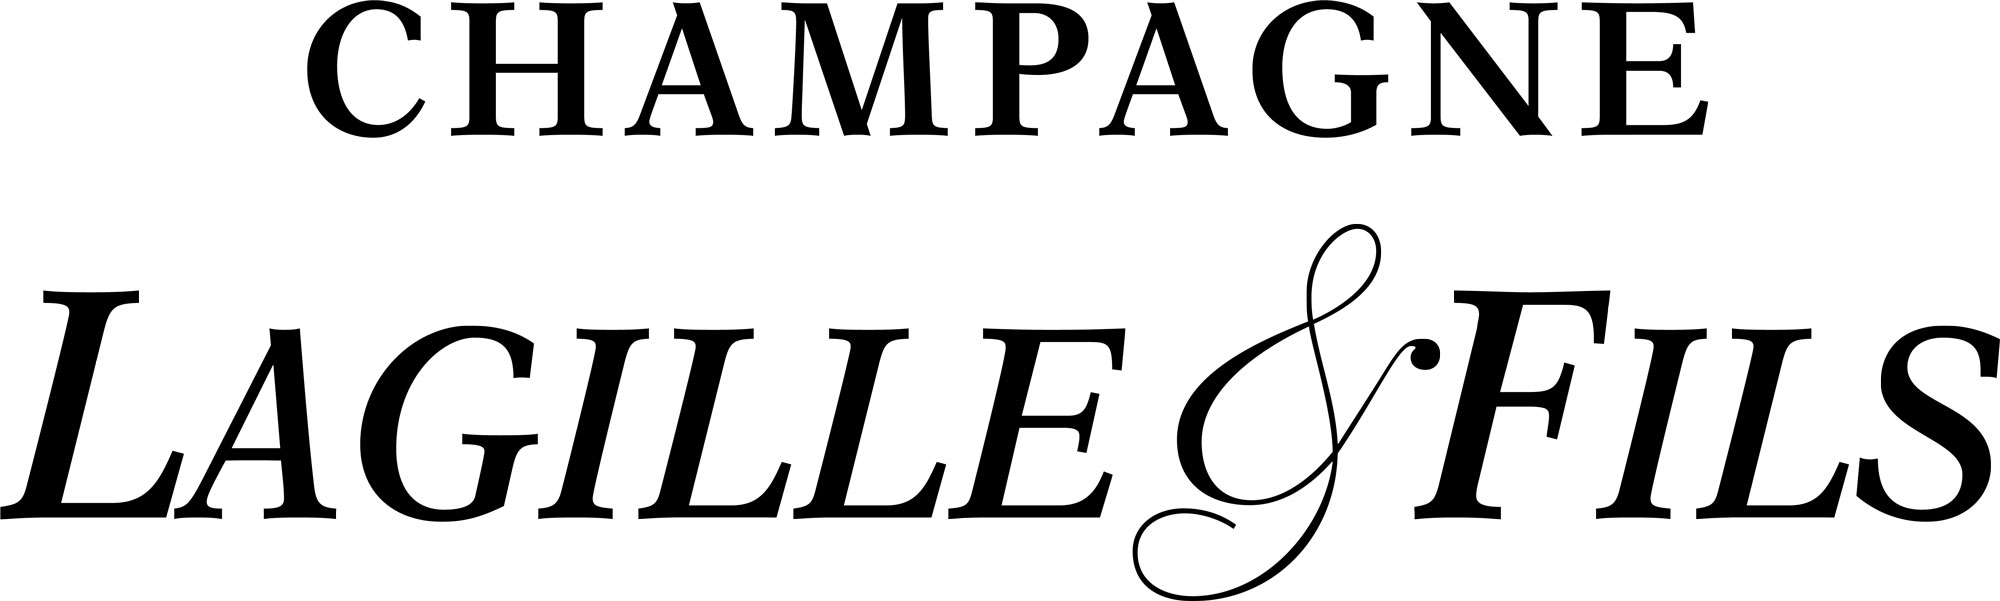 Champagne Lagille et Fils 